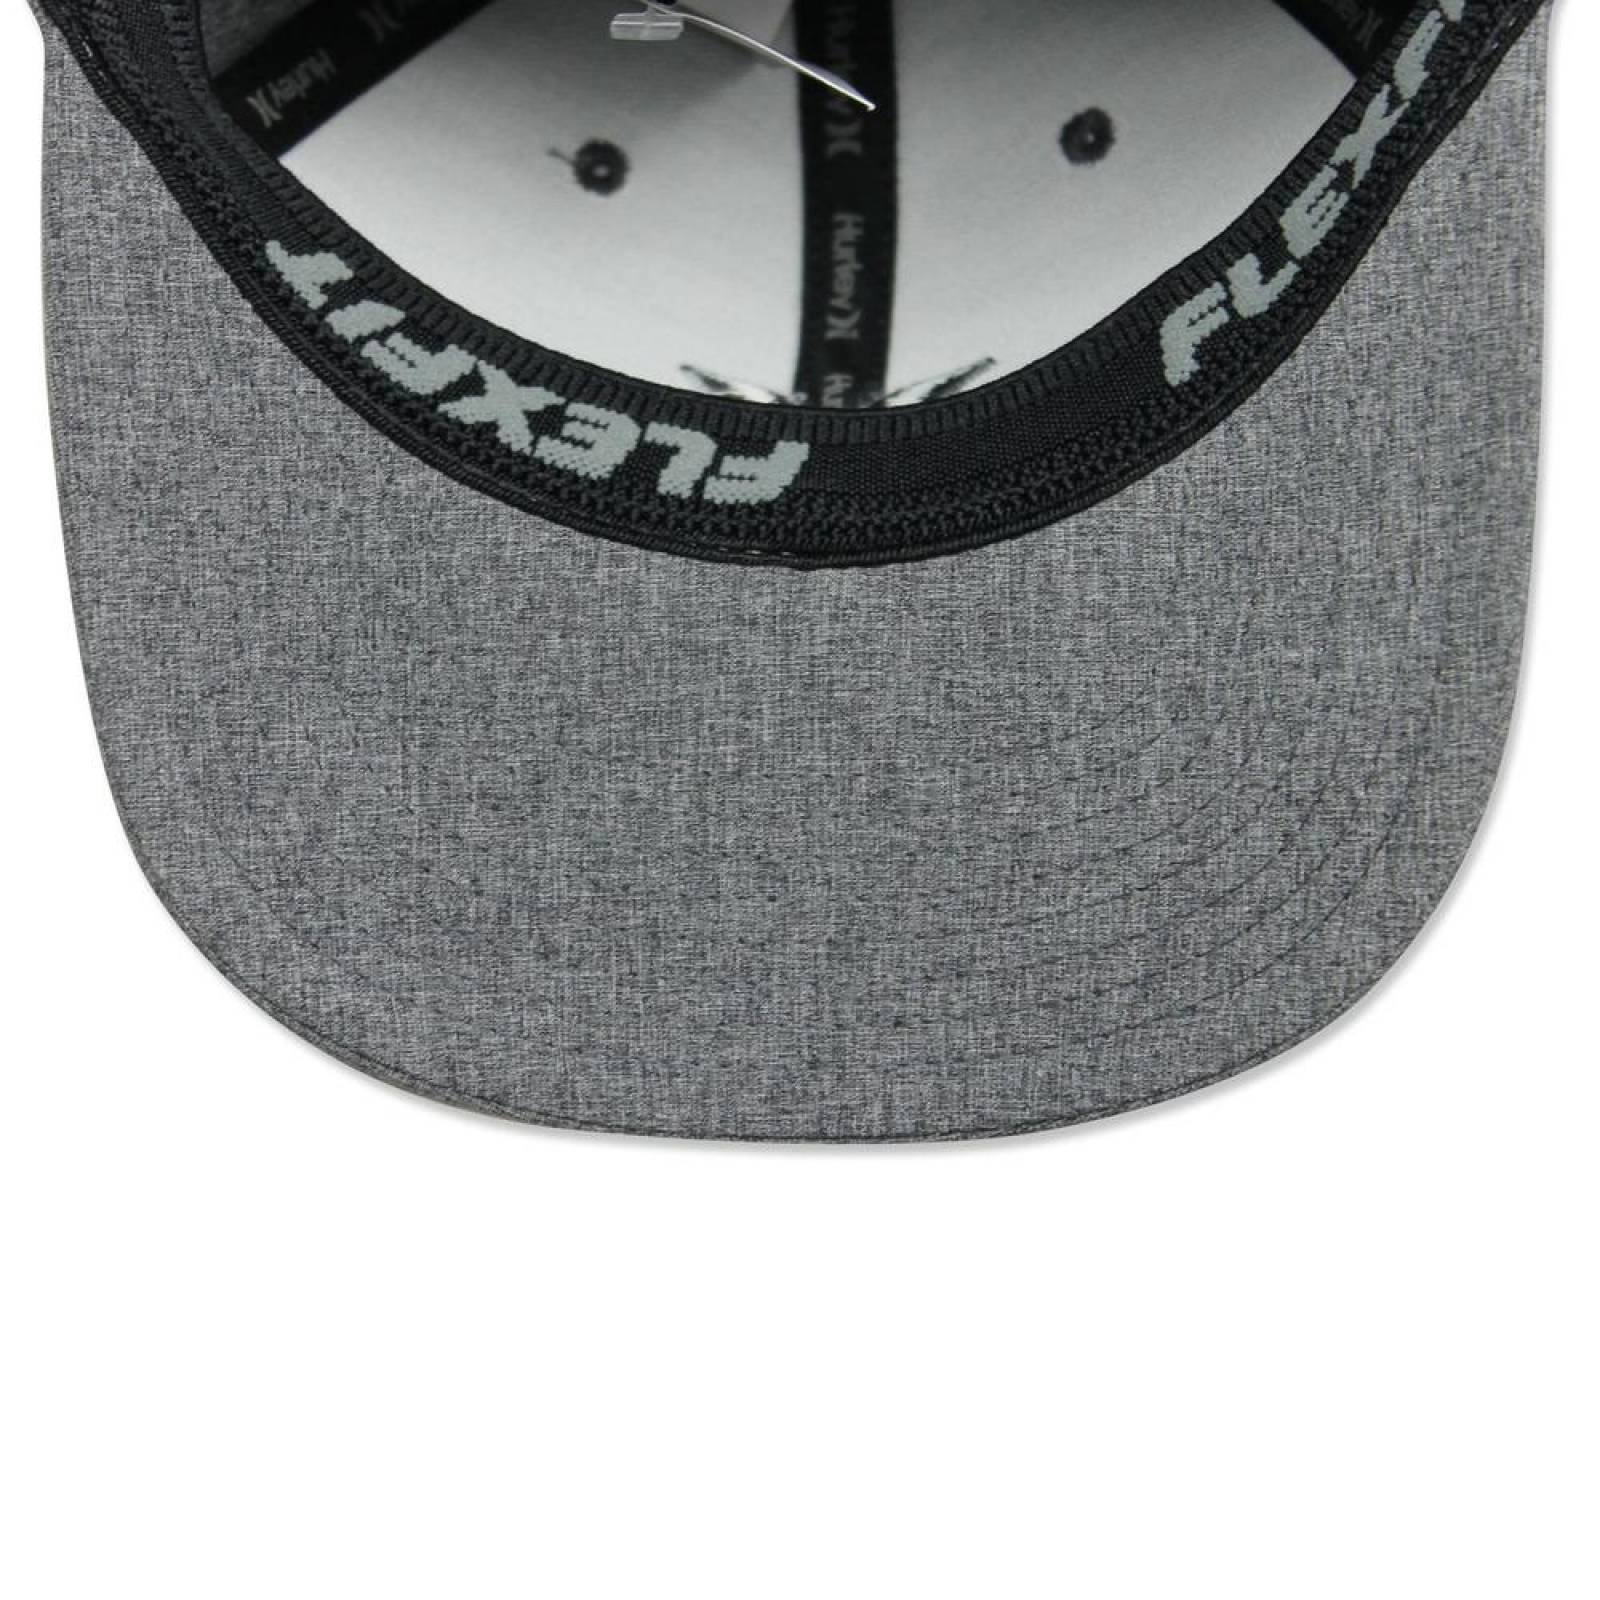 Gorra Hurley Suits Outline Hats Fit Gris/Negro-S/M 